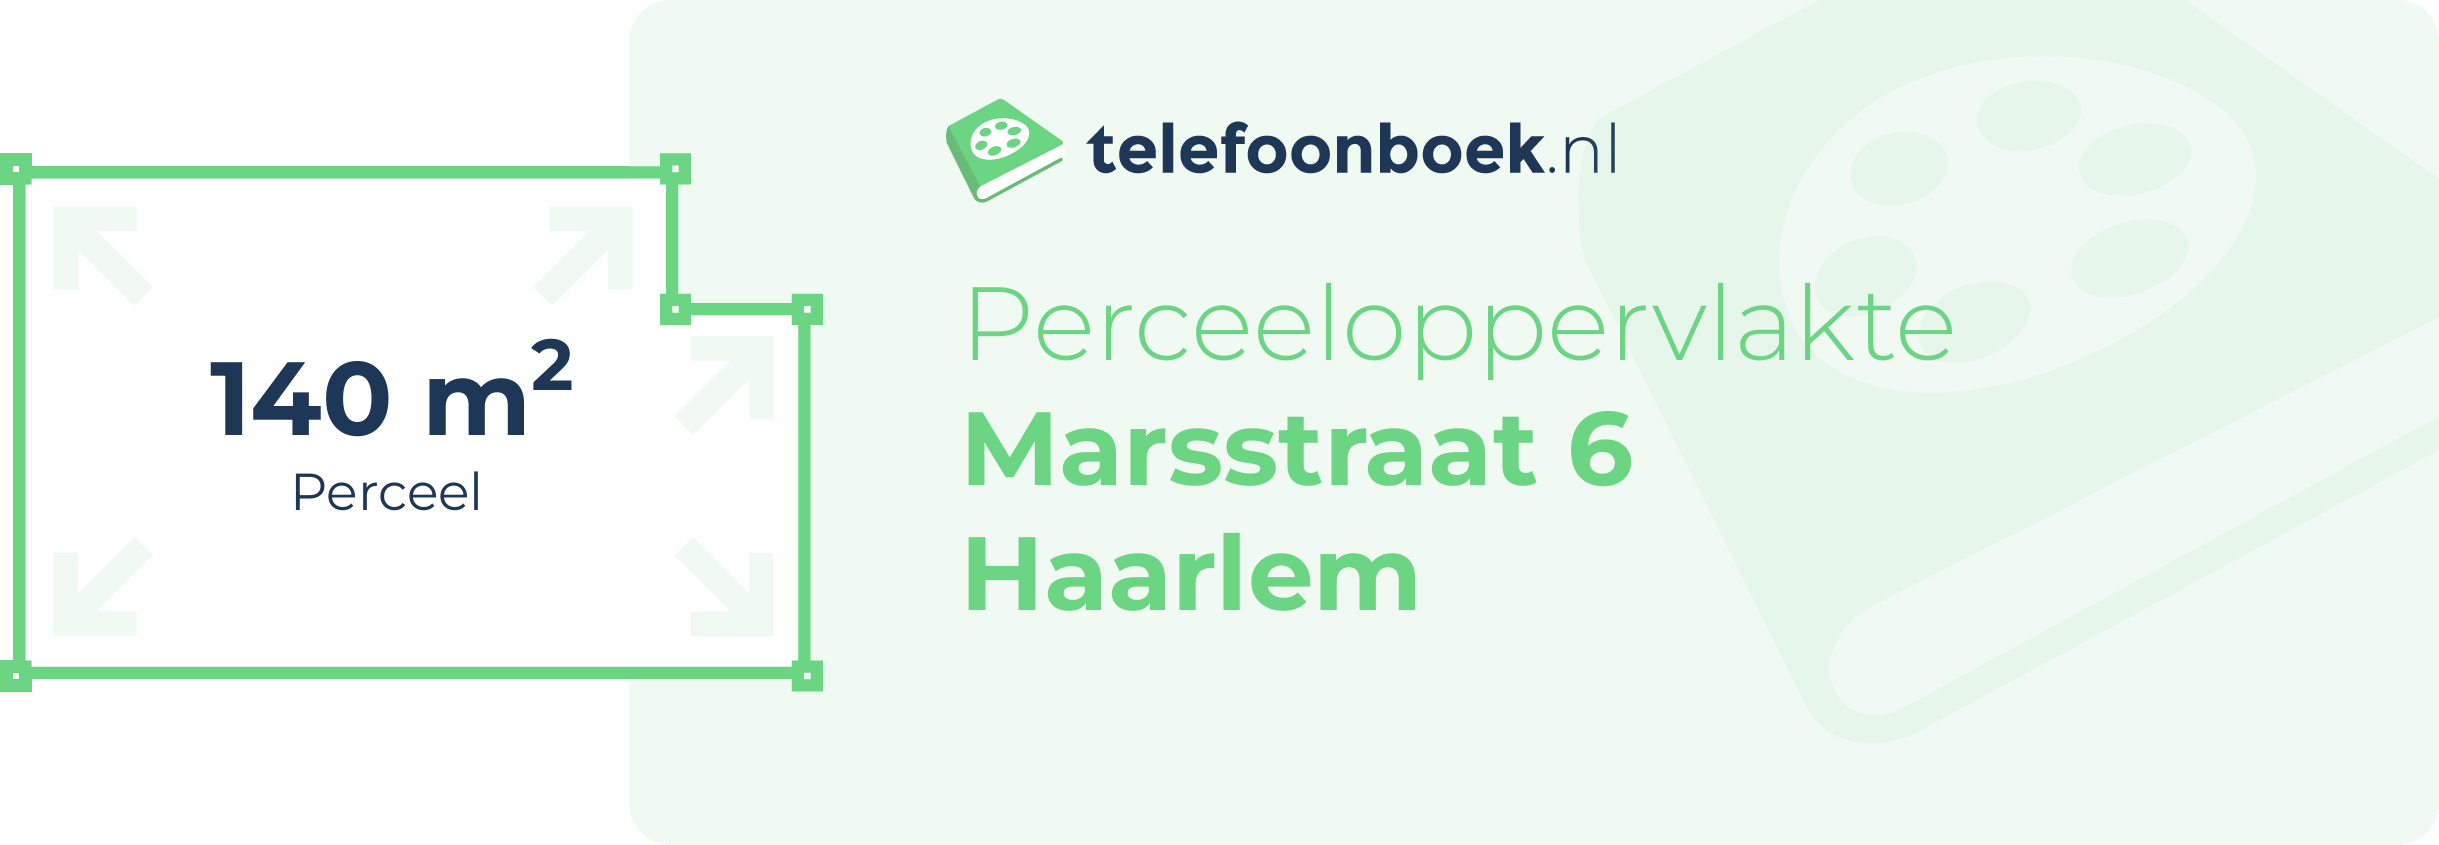 Perceeloppervlakte Marsstraat 6 Haarlem